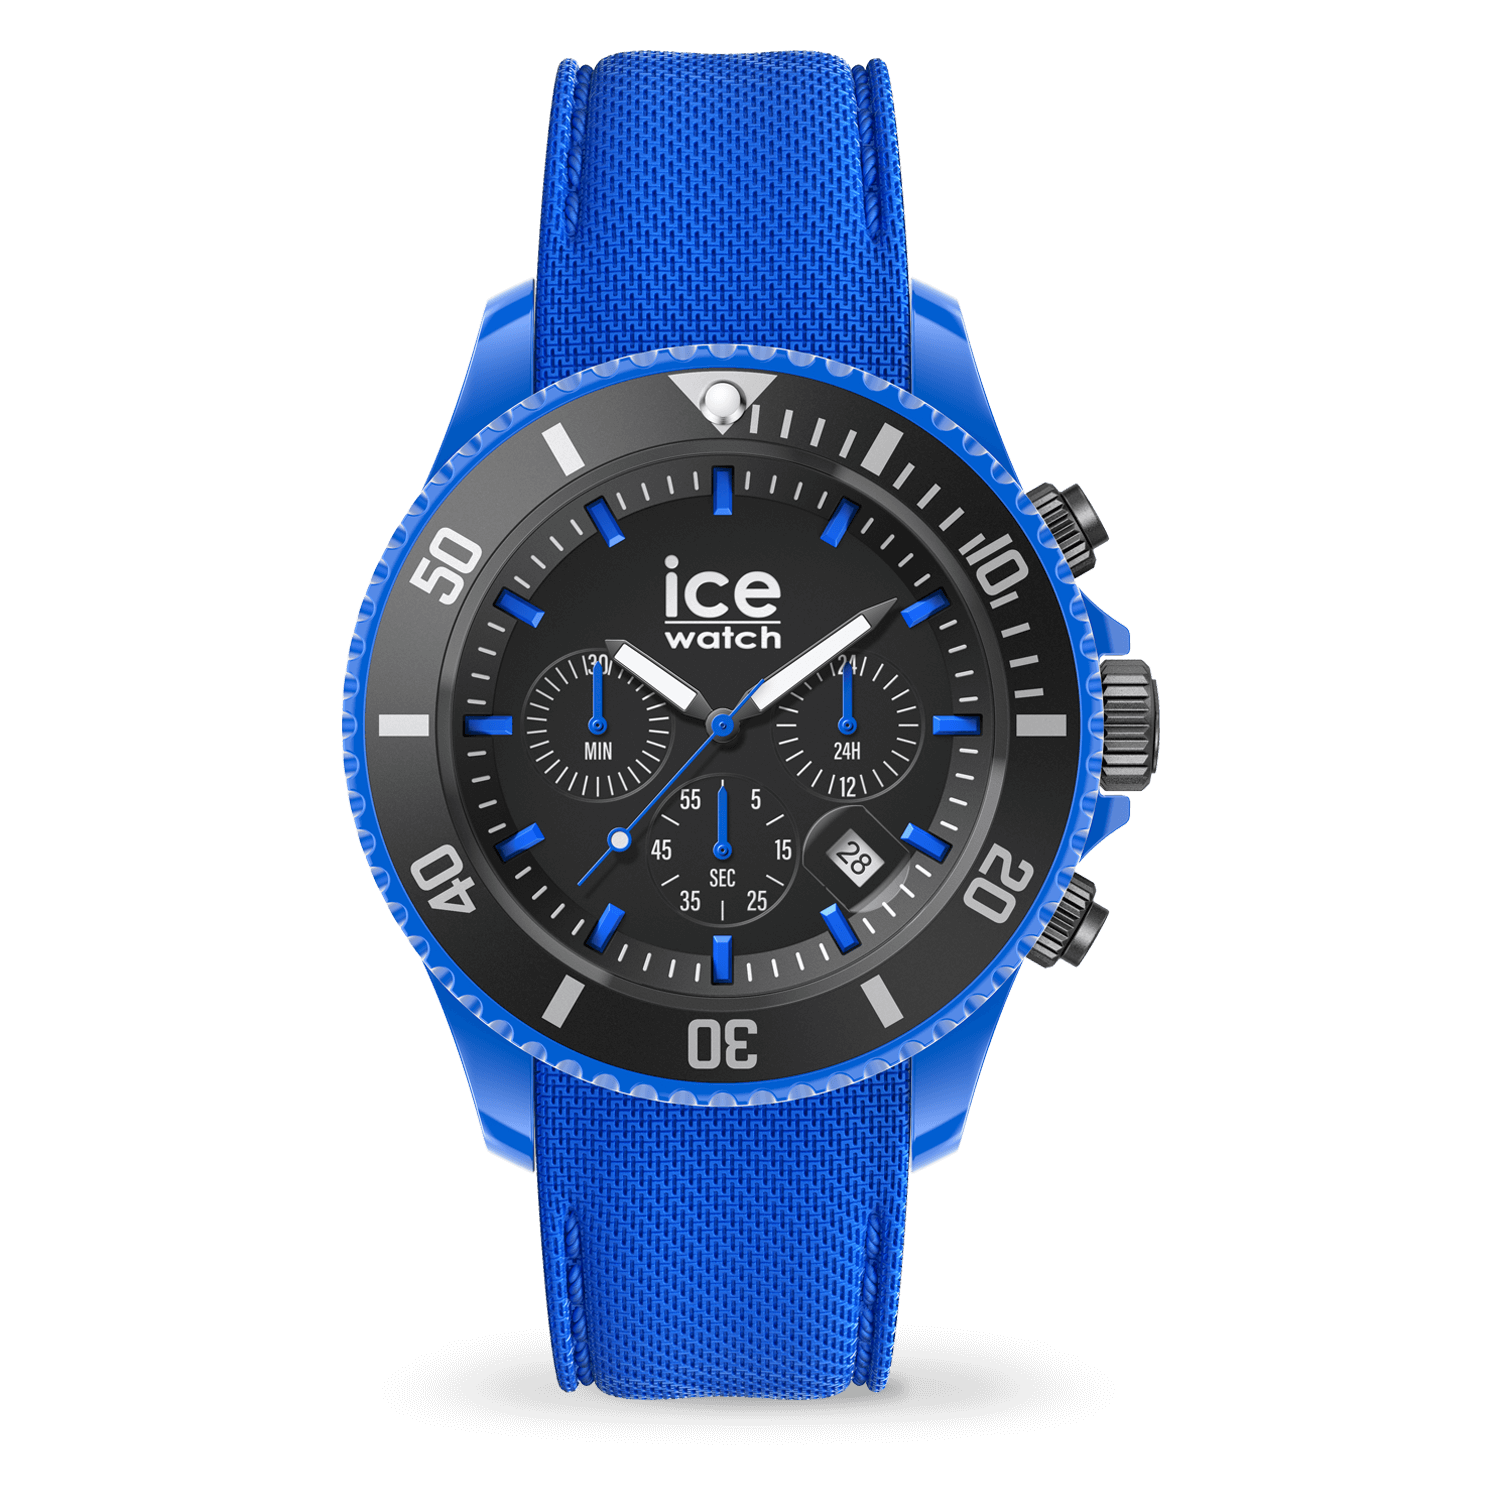 ICE chrono - Neon blue